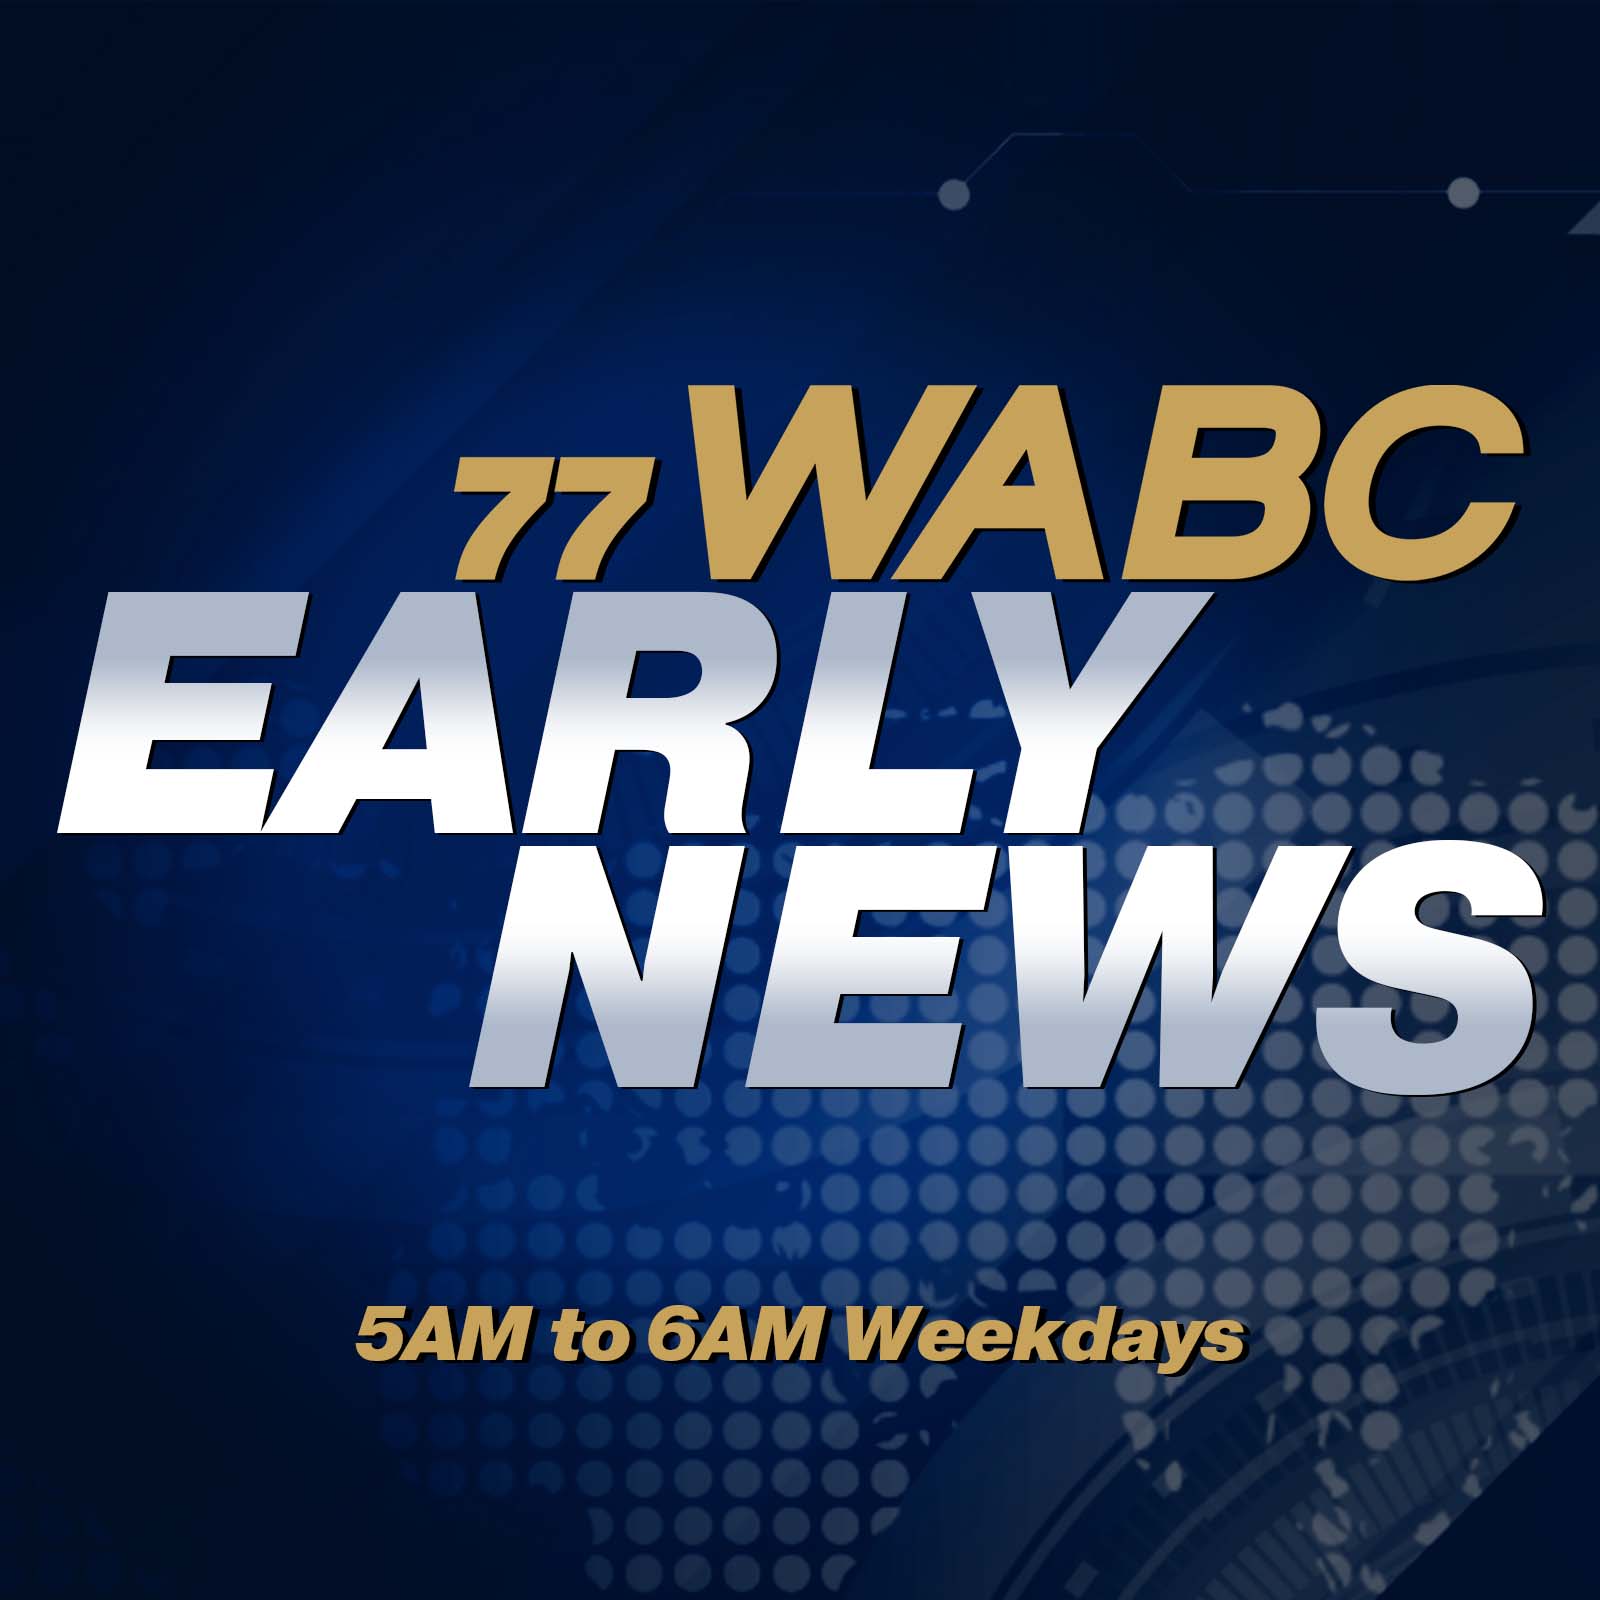 77 WABC Early News